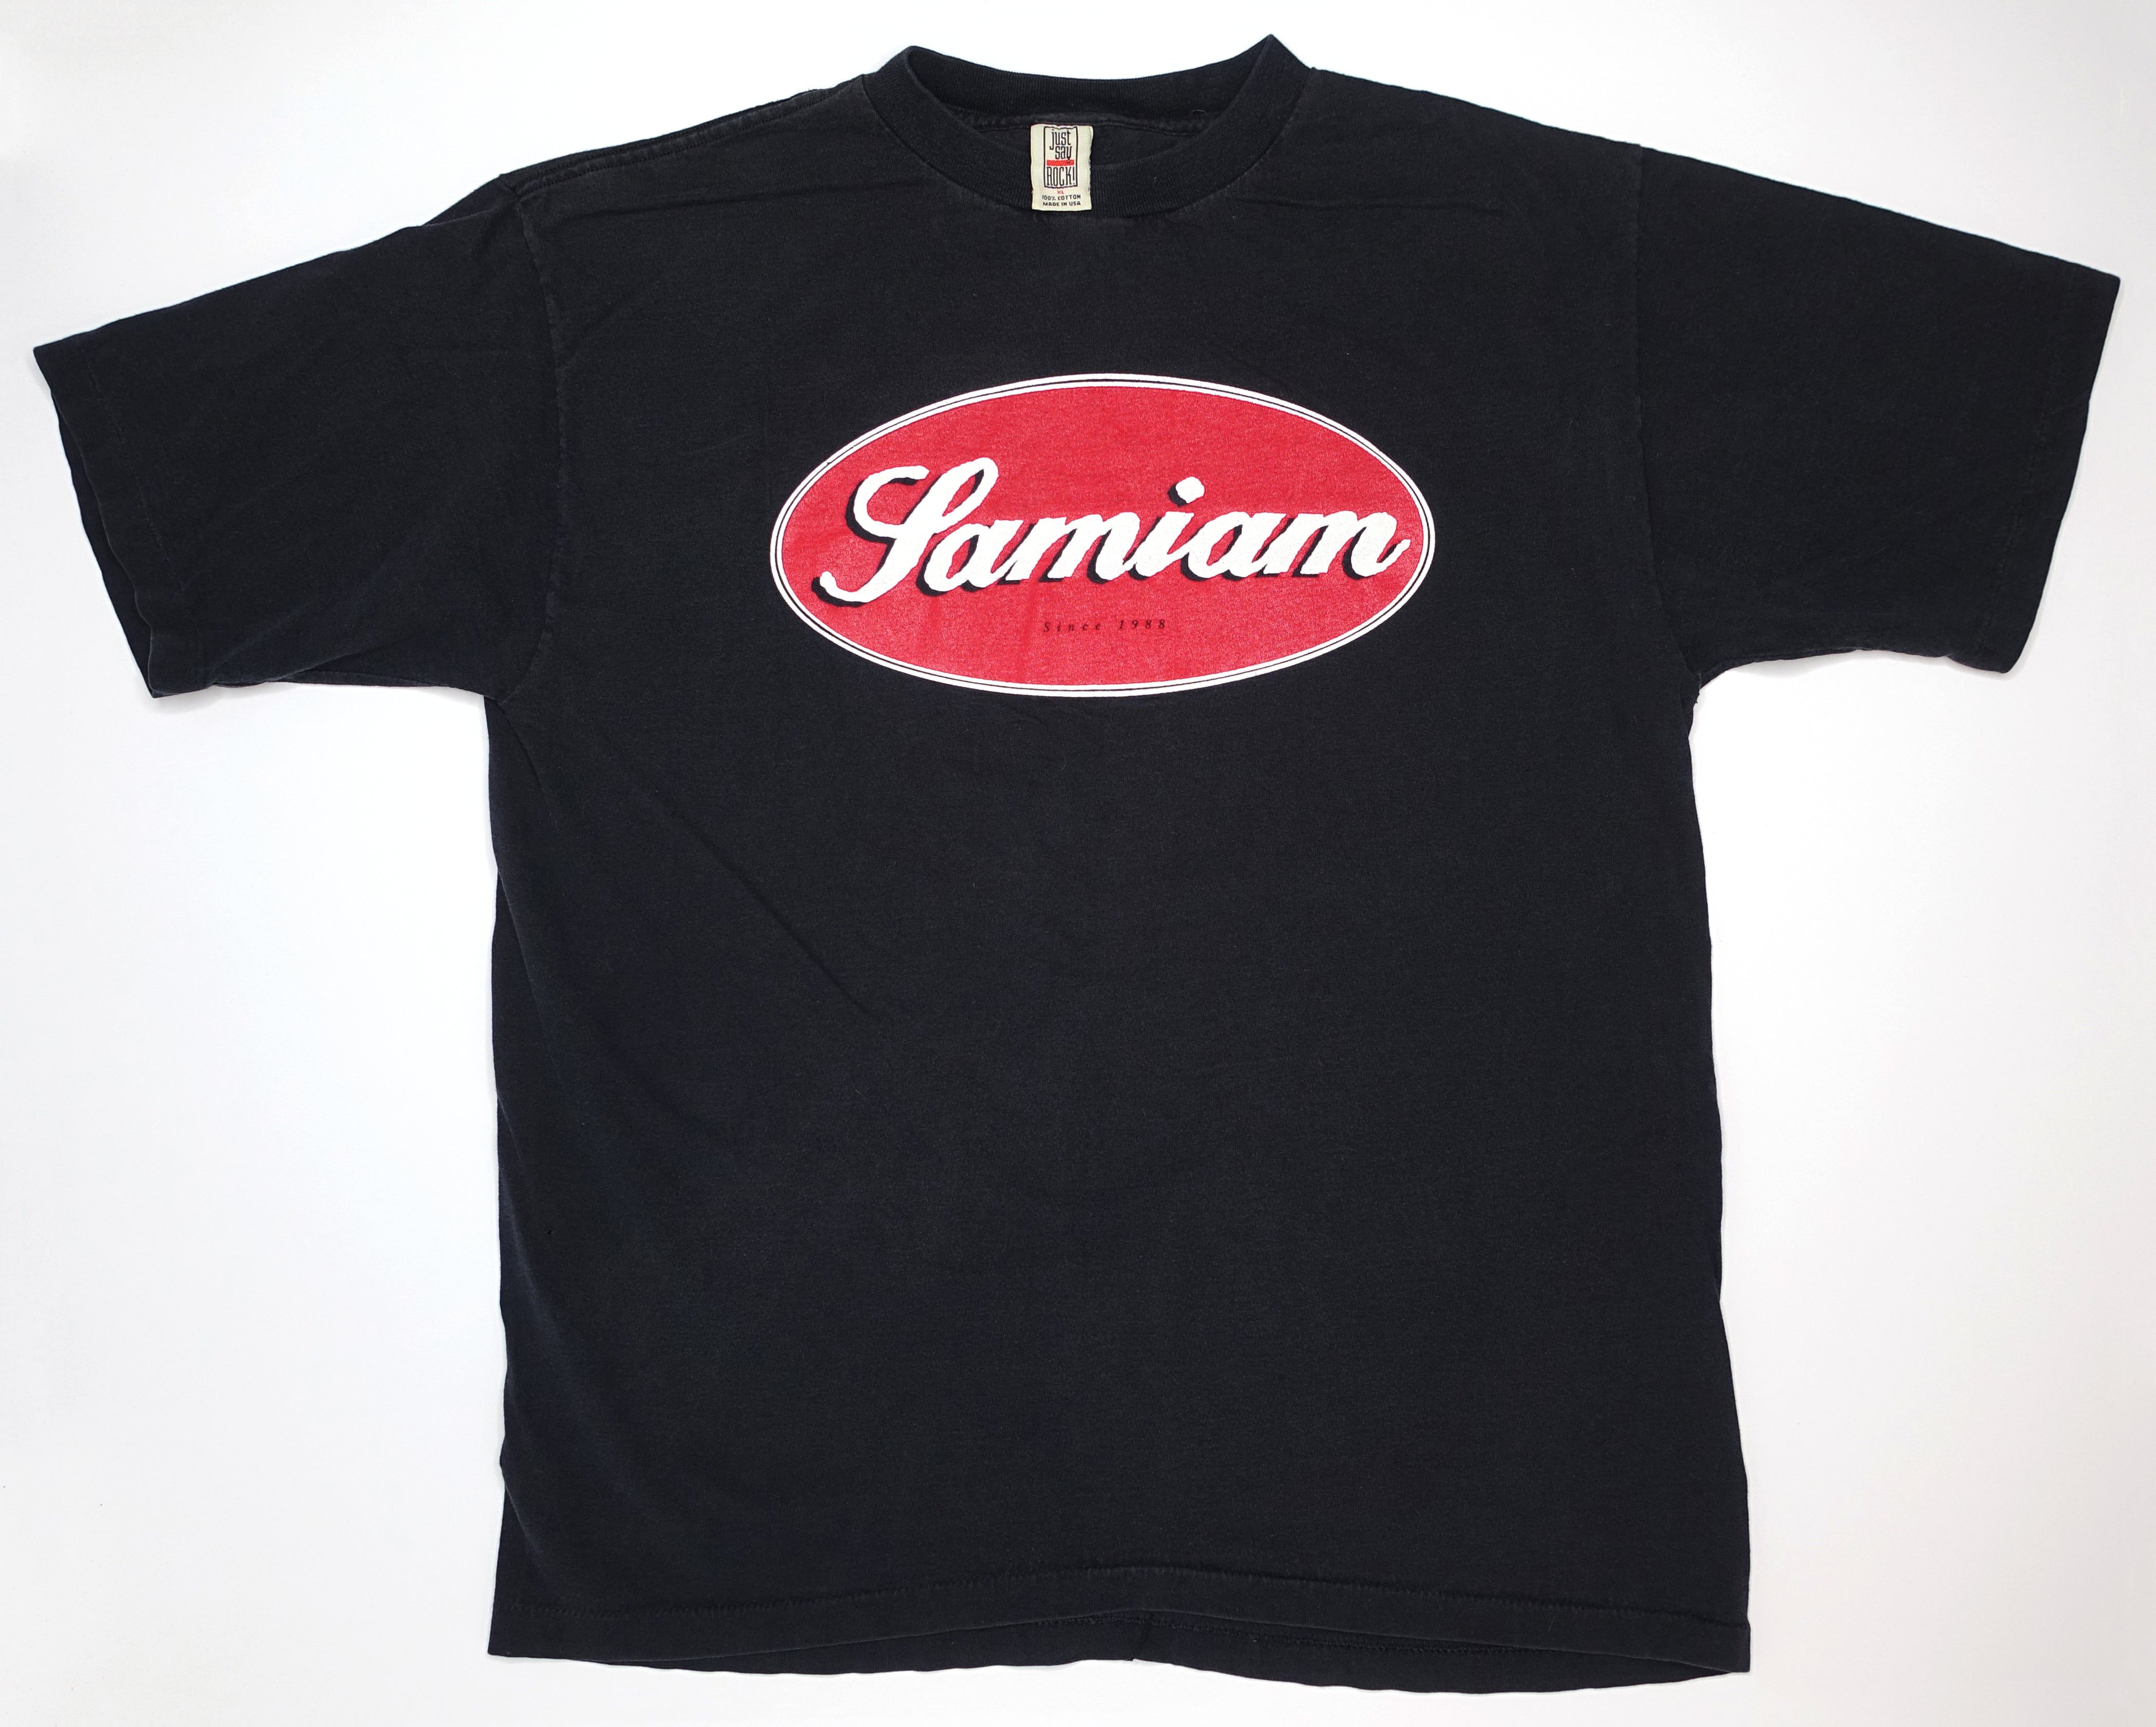 Samiam - Oval Logo / Eat At Billy's Good Eats 1992 Tour Shirt Size XL